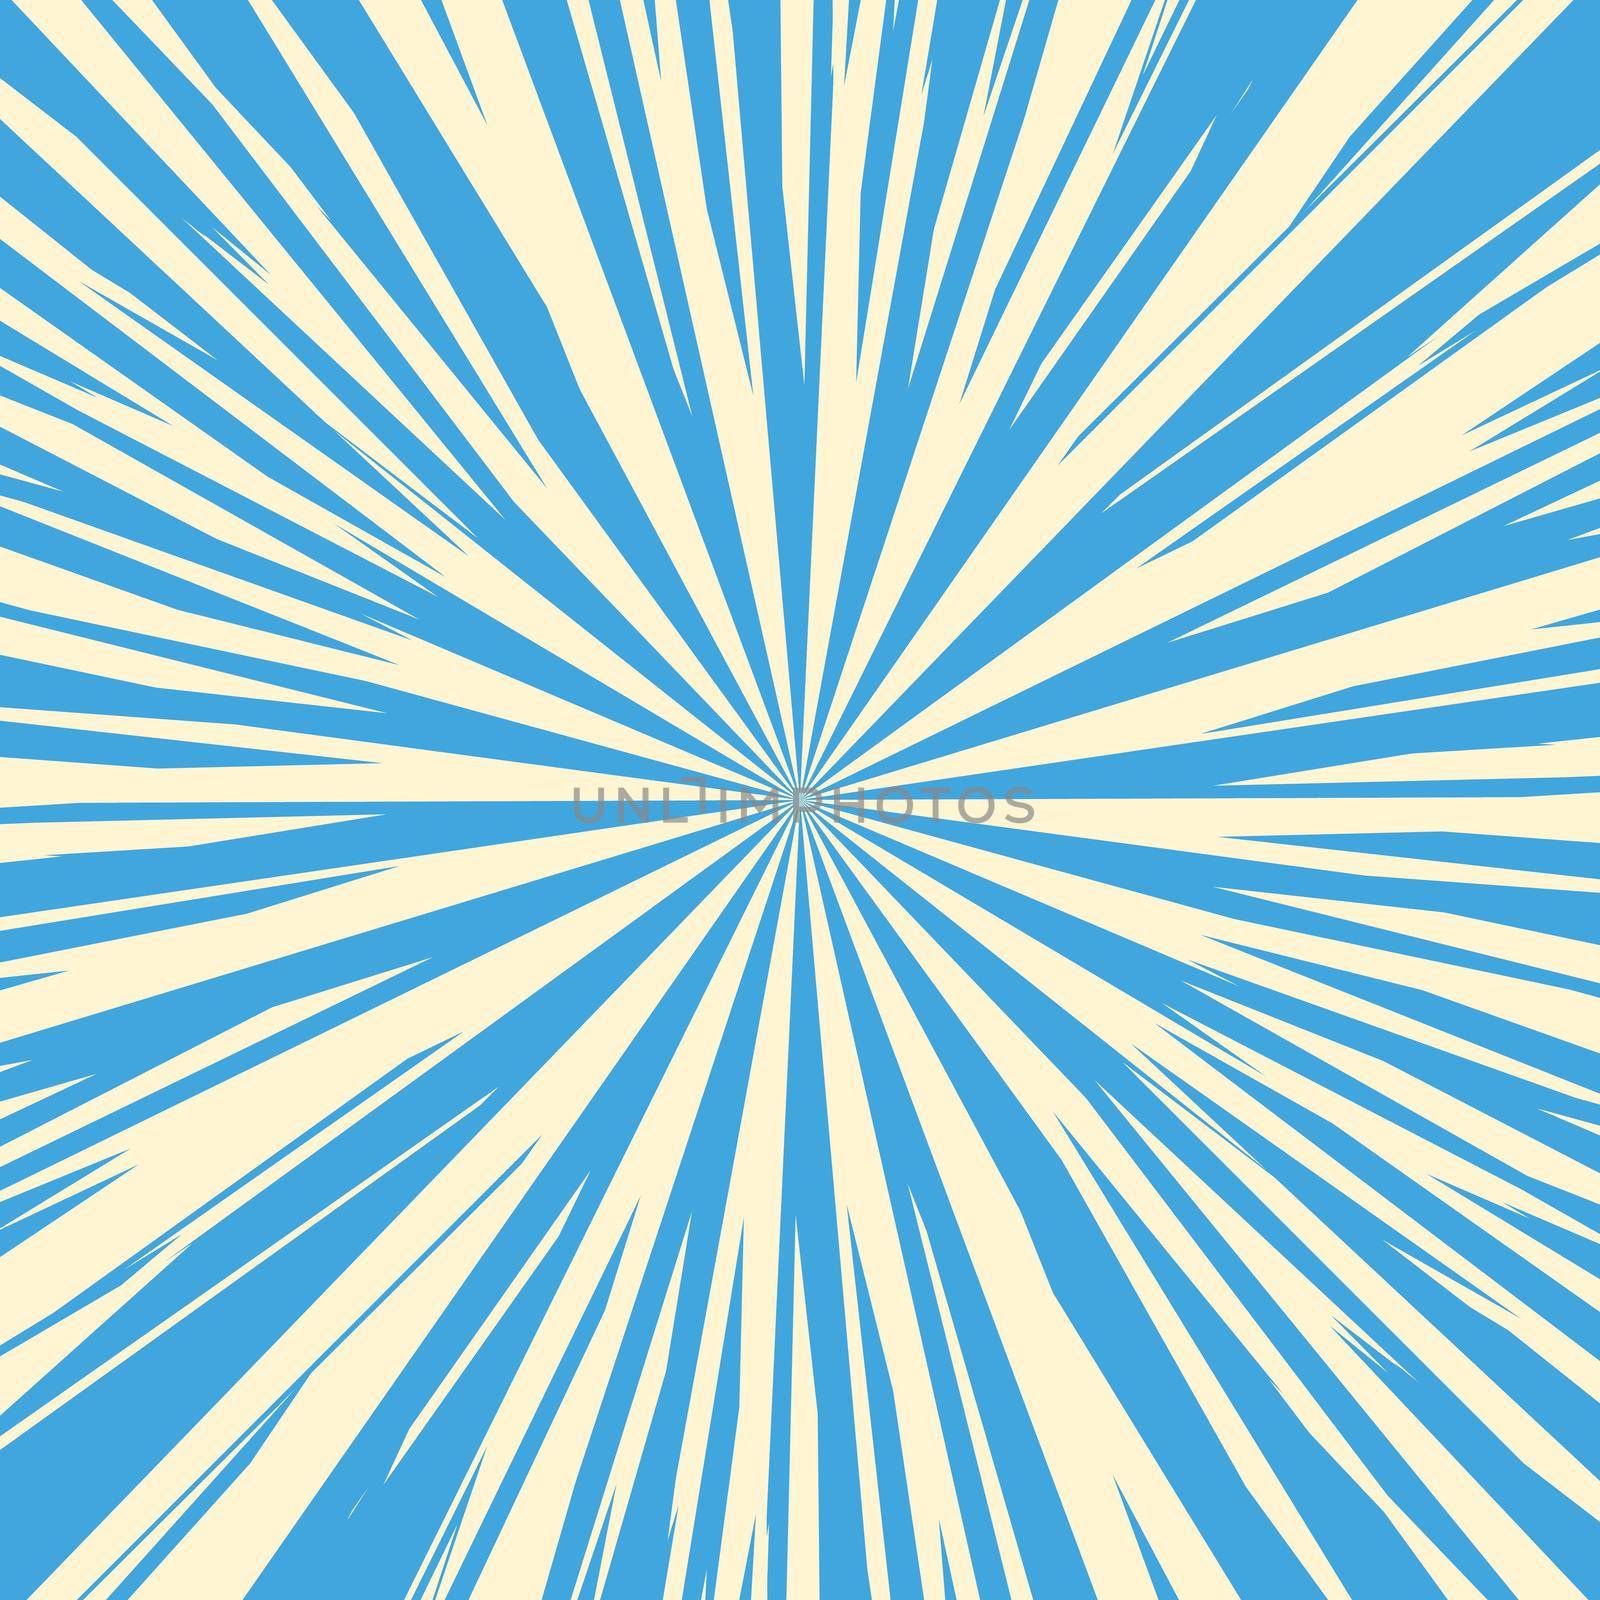 Pop art radial colorful comics book magazine cover. Striped blue digital background. Cartoon funny retro pattern strip mock up. Vector halftone illustration. Sunburst, starburst shape by allaku